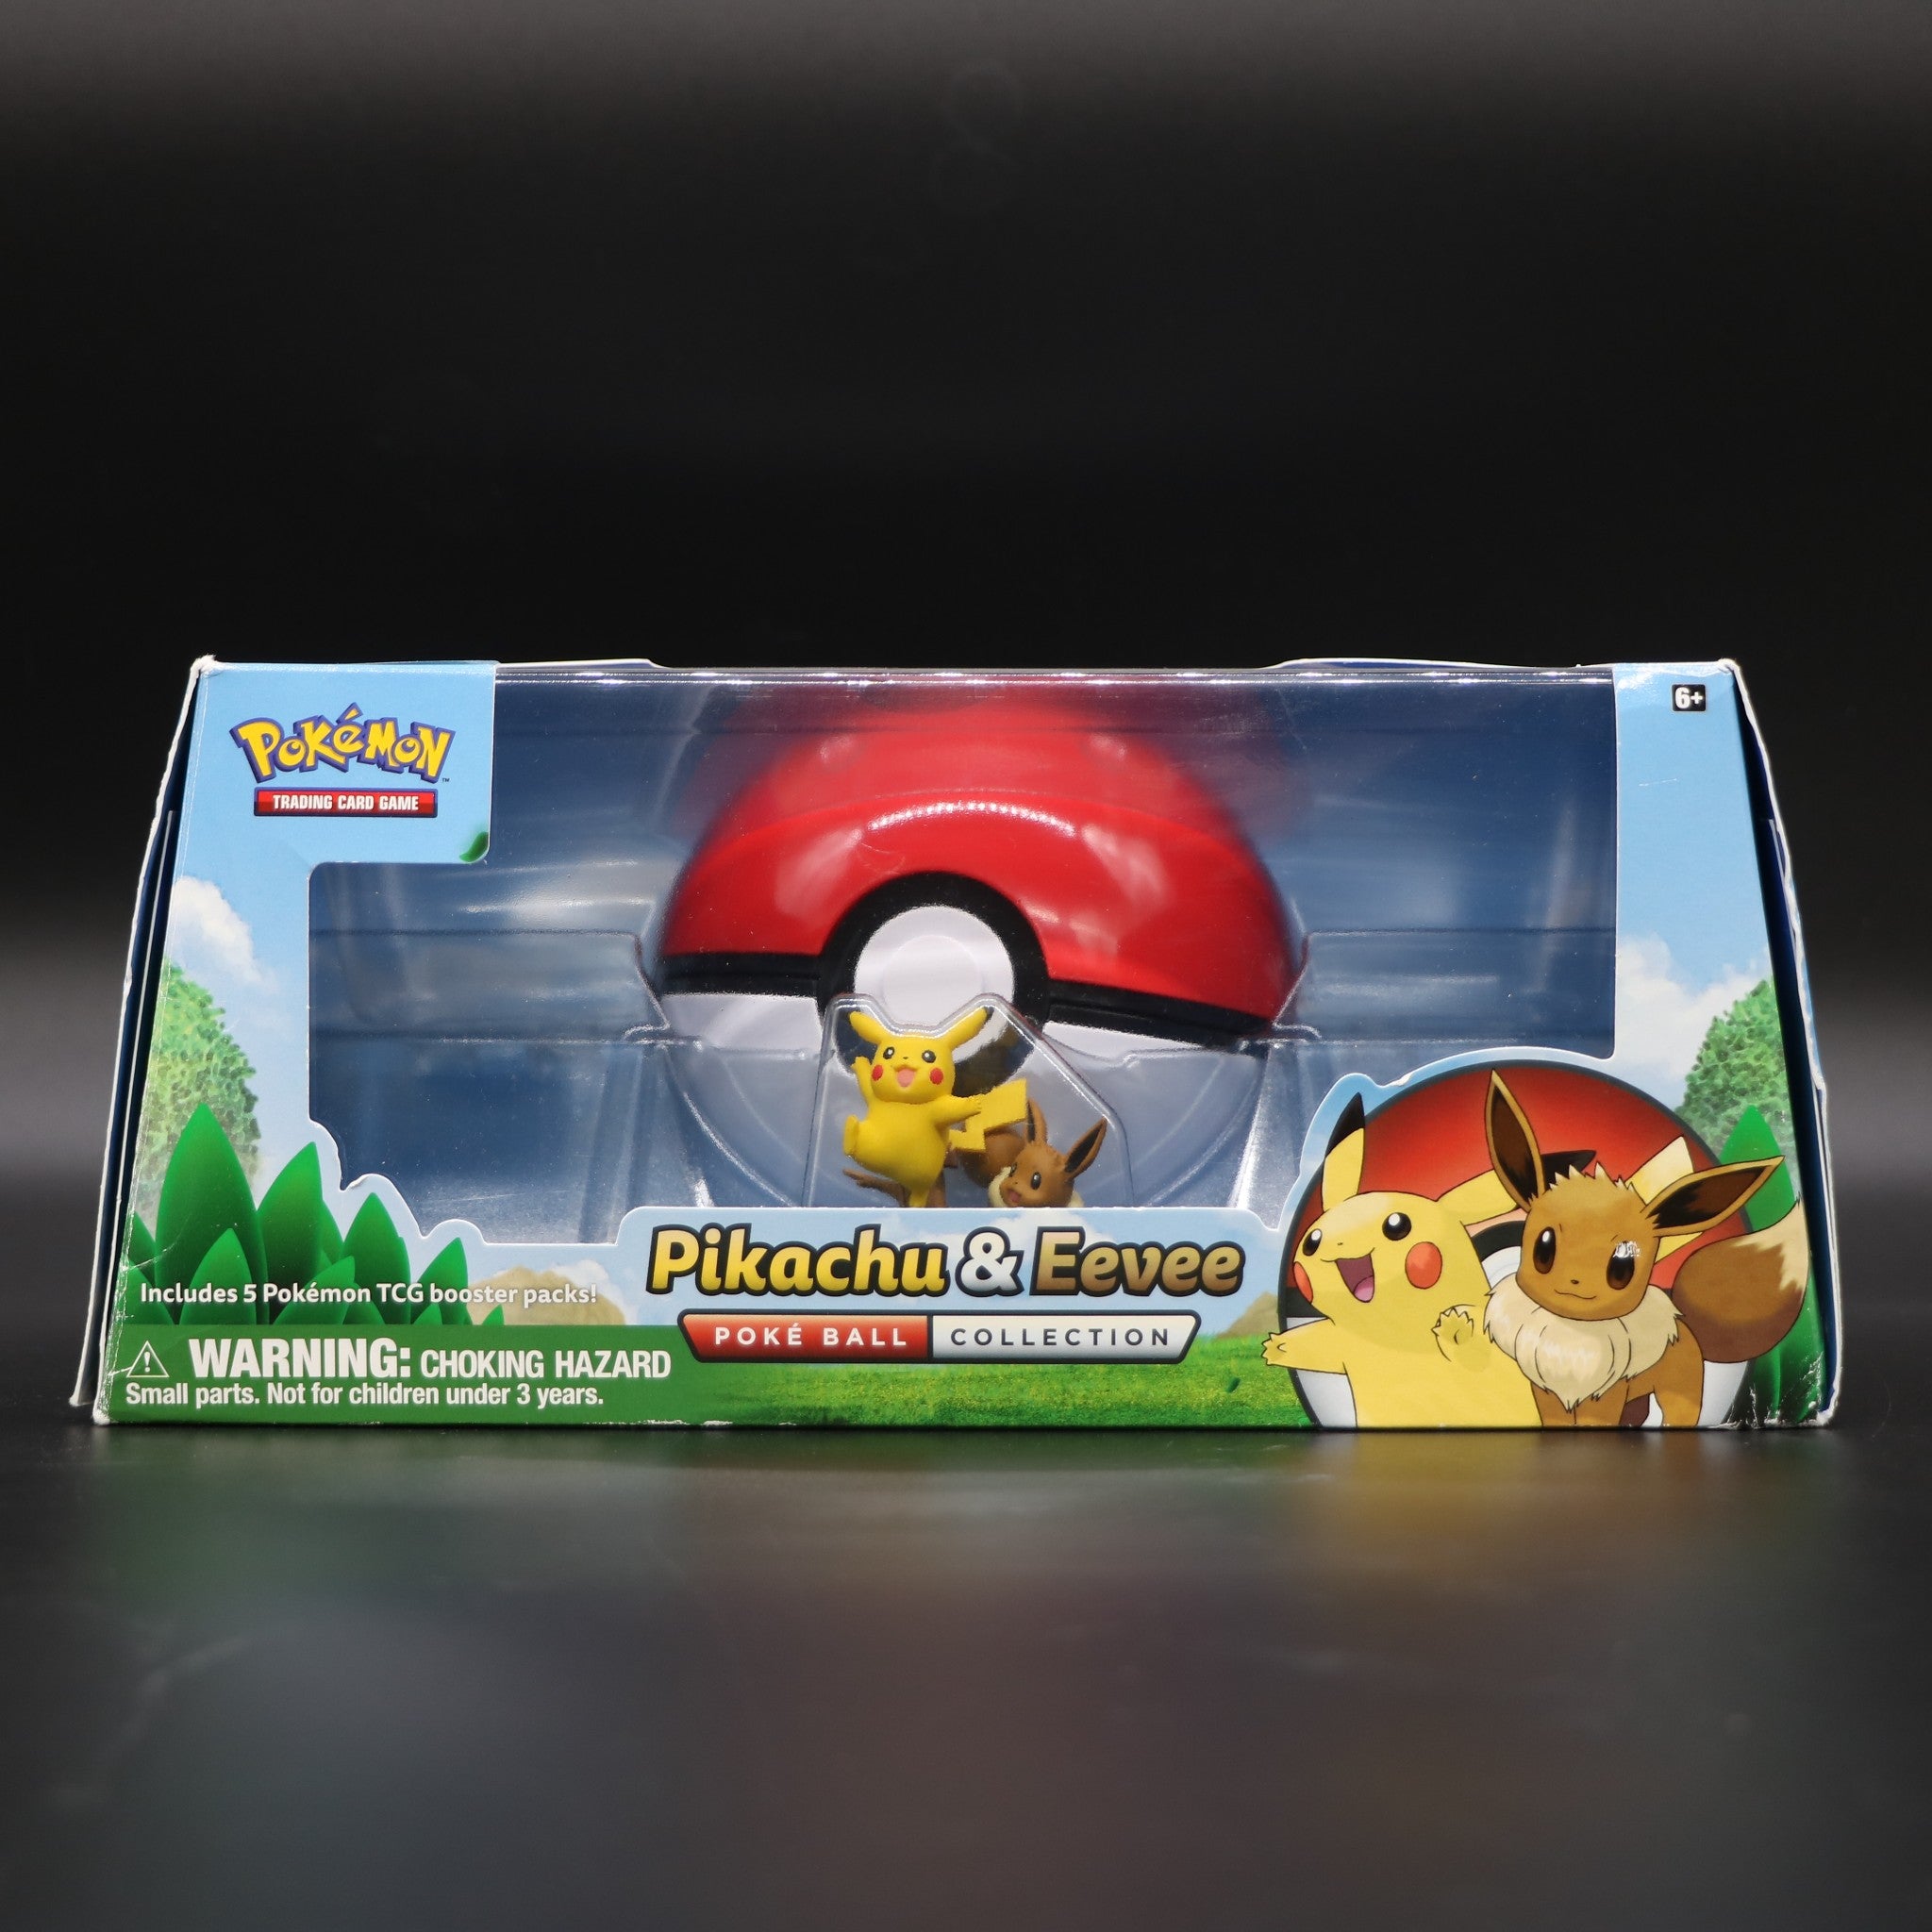 Pokémon Pikachu & Eevee Poké Ball Collection Rare Inc Figure Ball